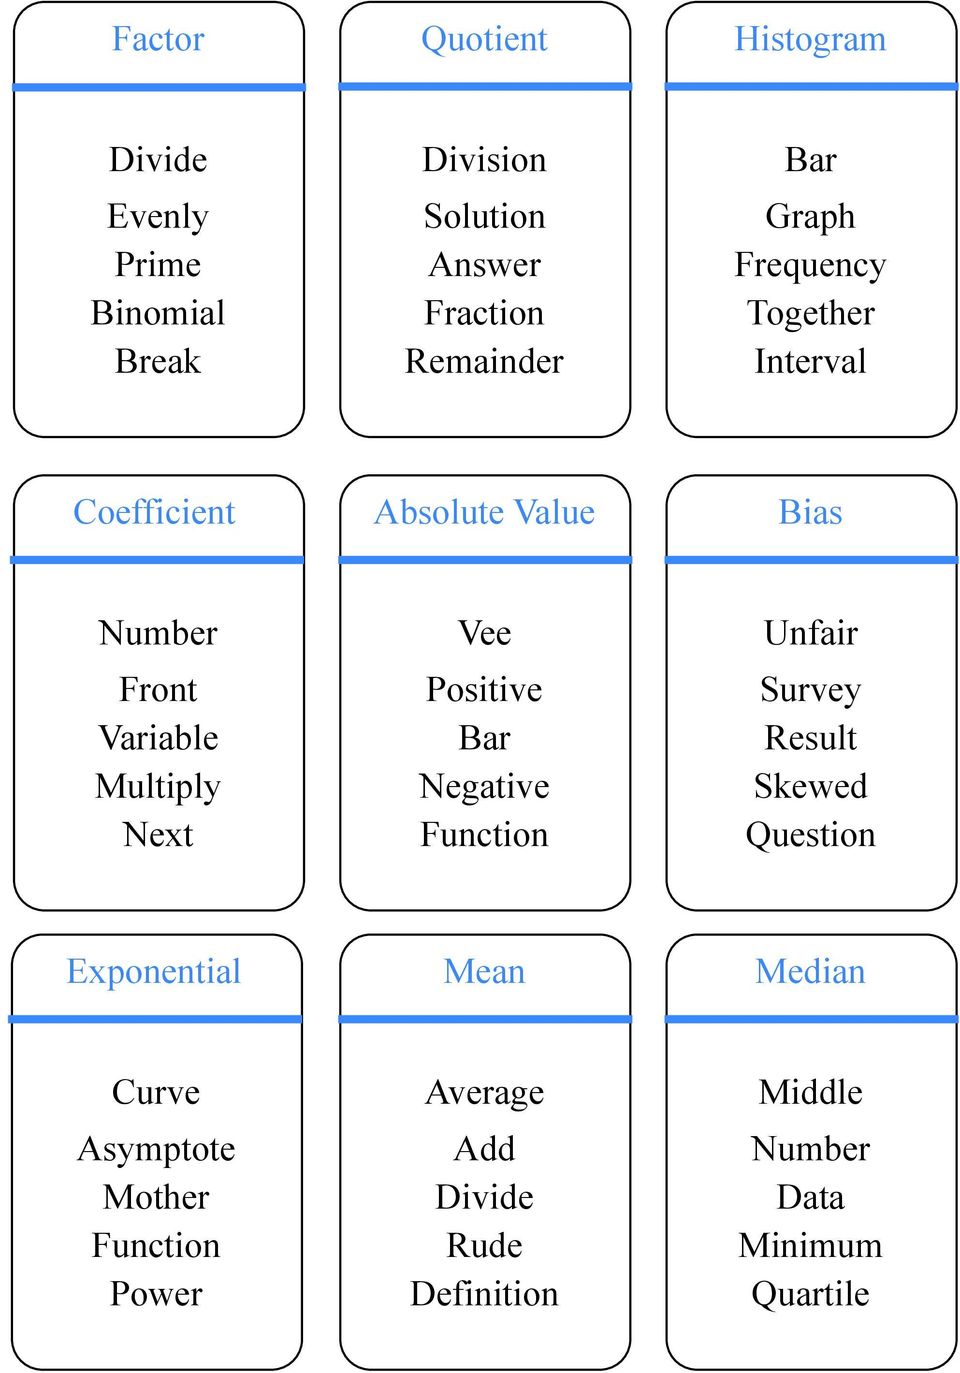 Value Vee Positive Bar Negative Function Bias Unfair Survey Result Skewed Question